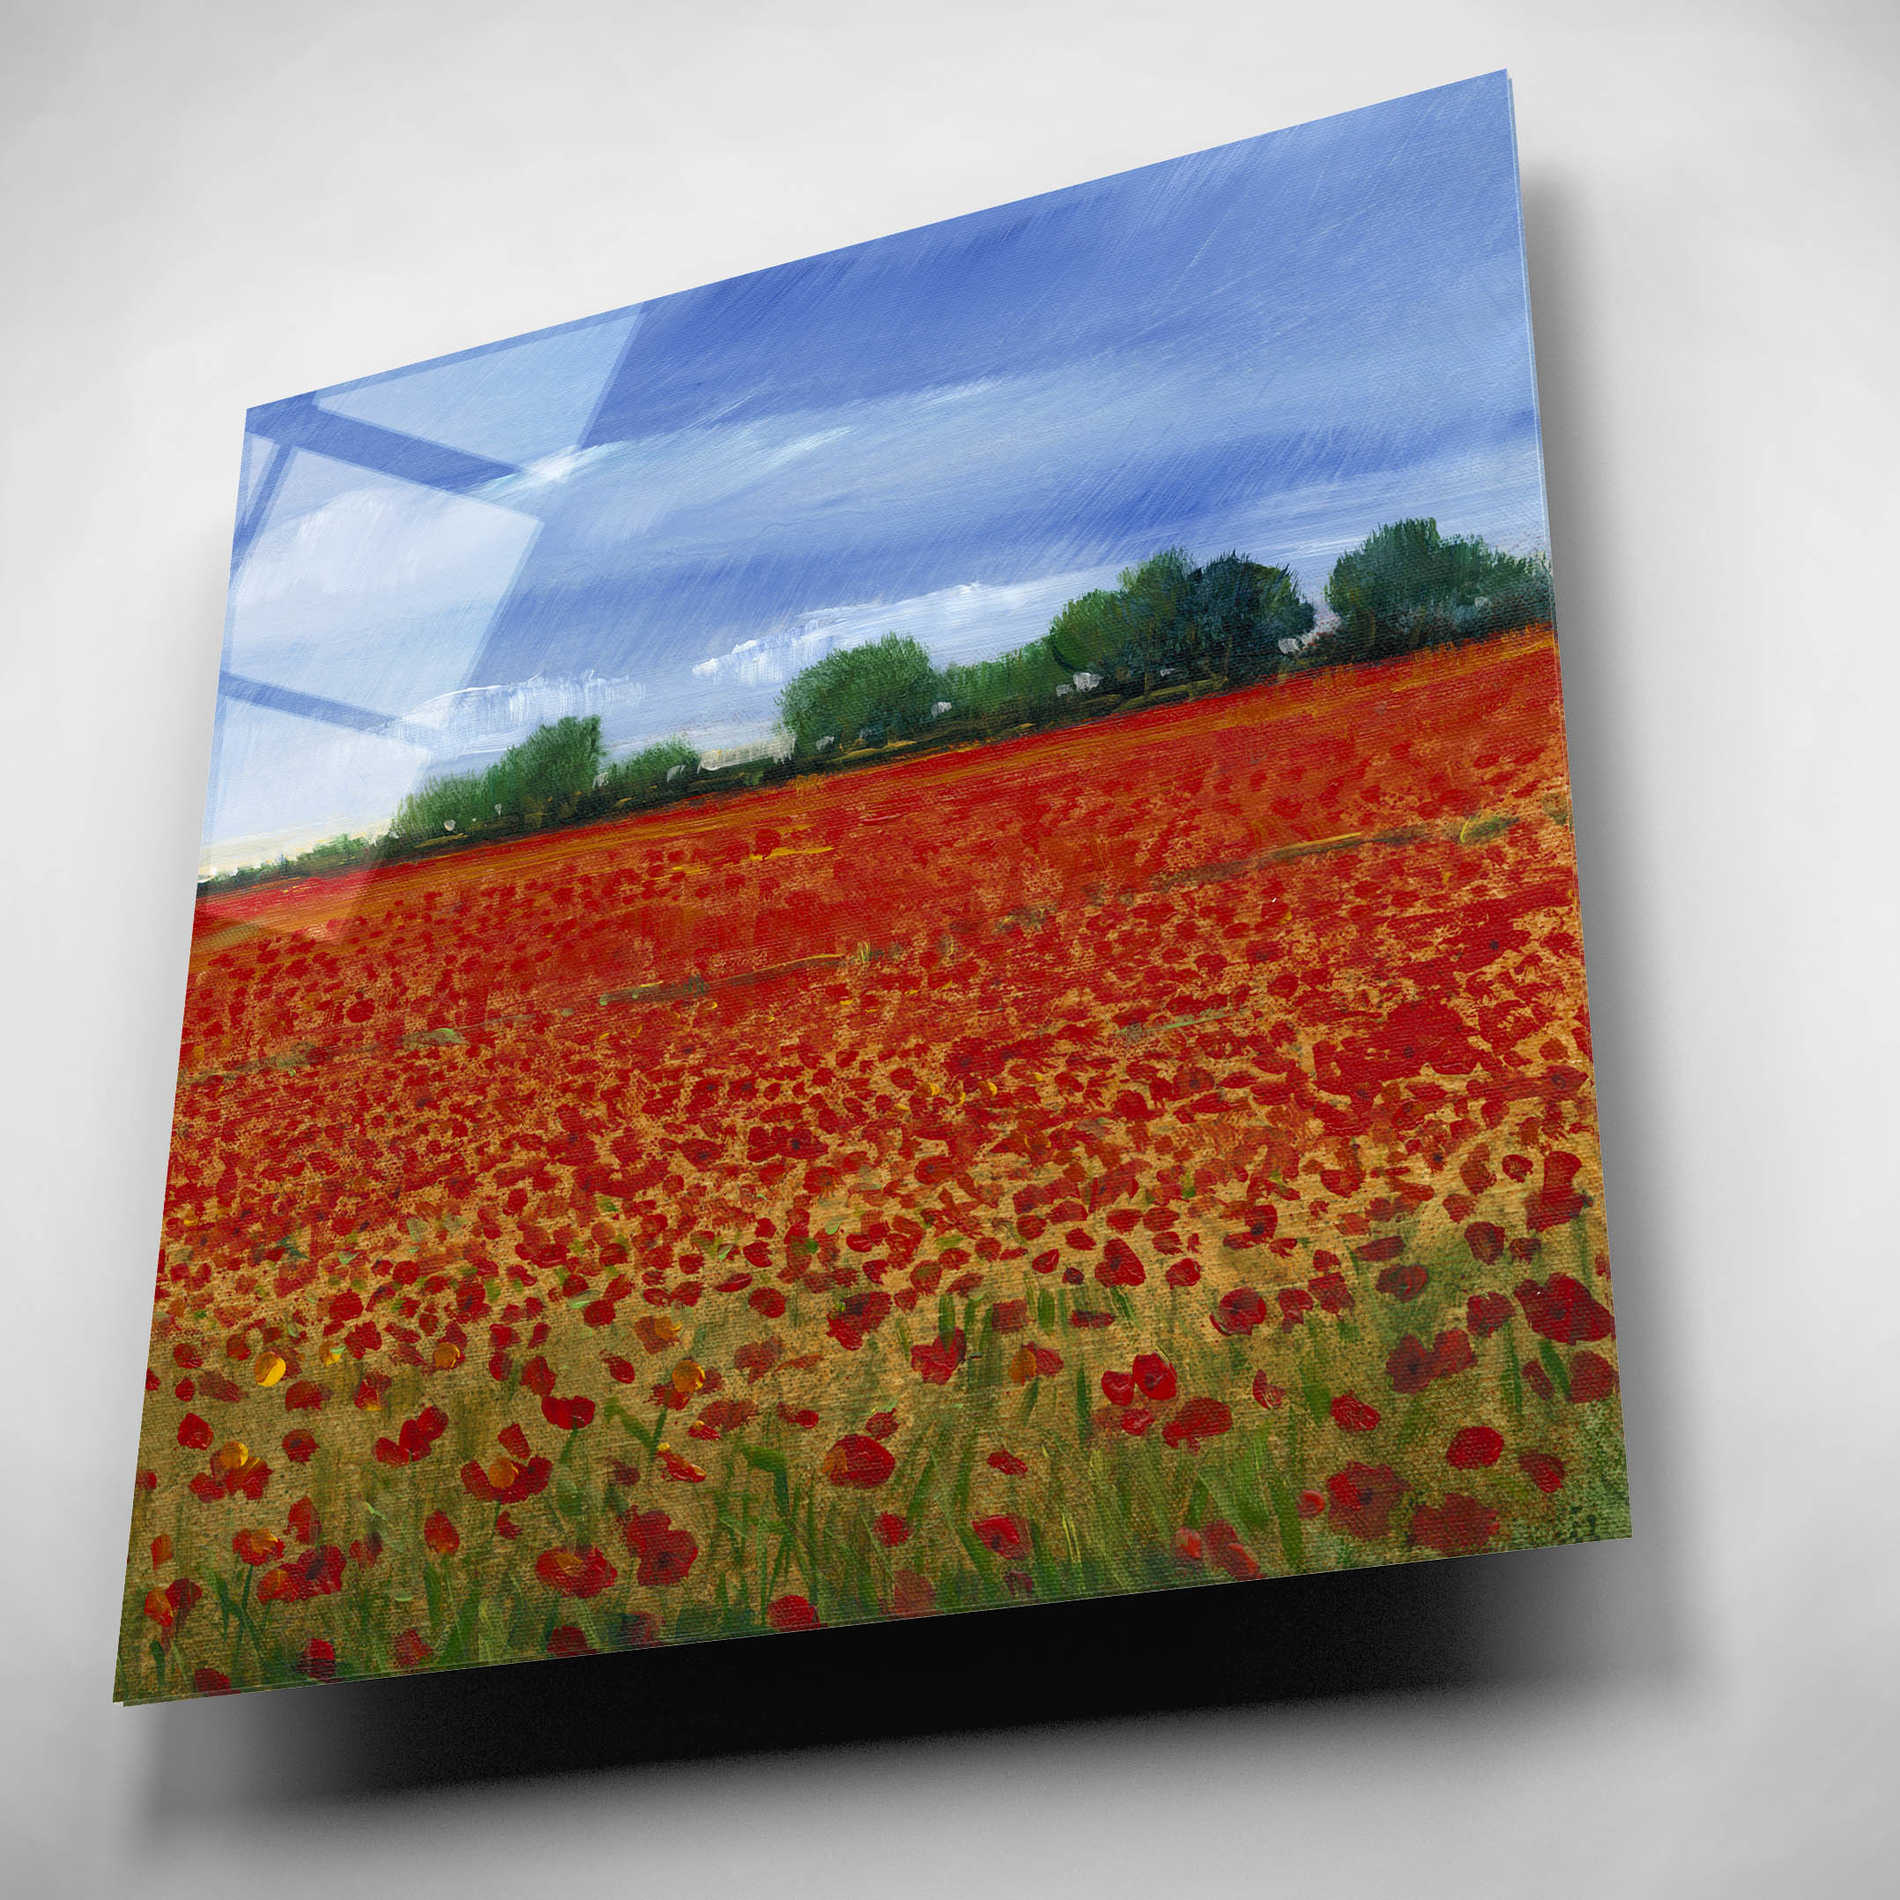 Epic Art 'Field of Poppies II' by Tim O'Toole, Acrylic Glass Wall Art,12x12